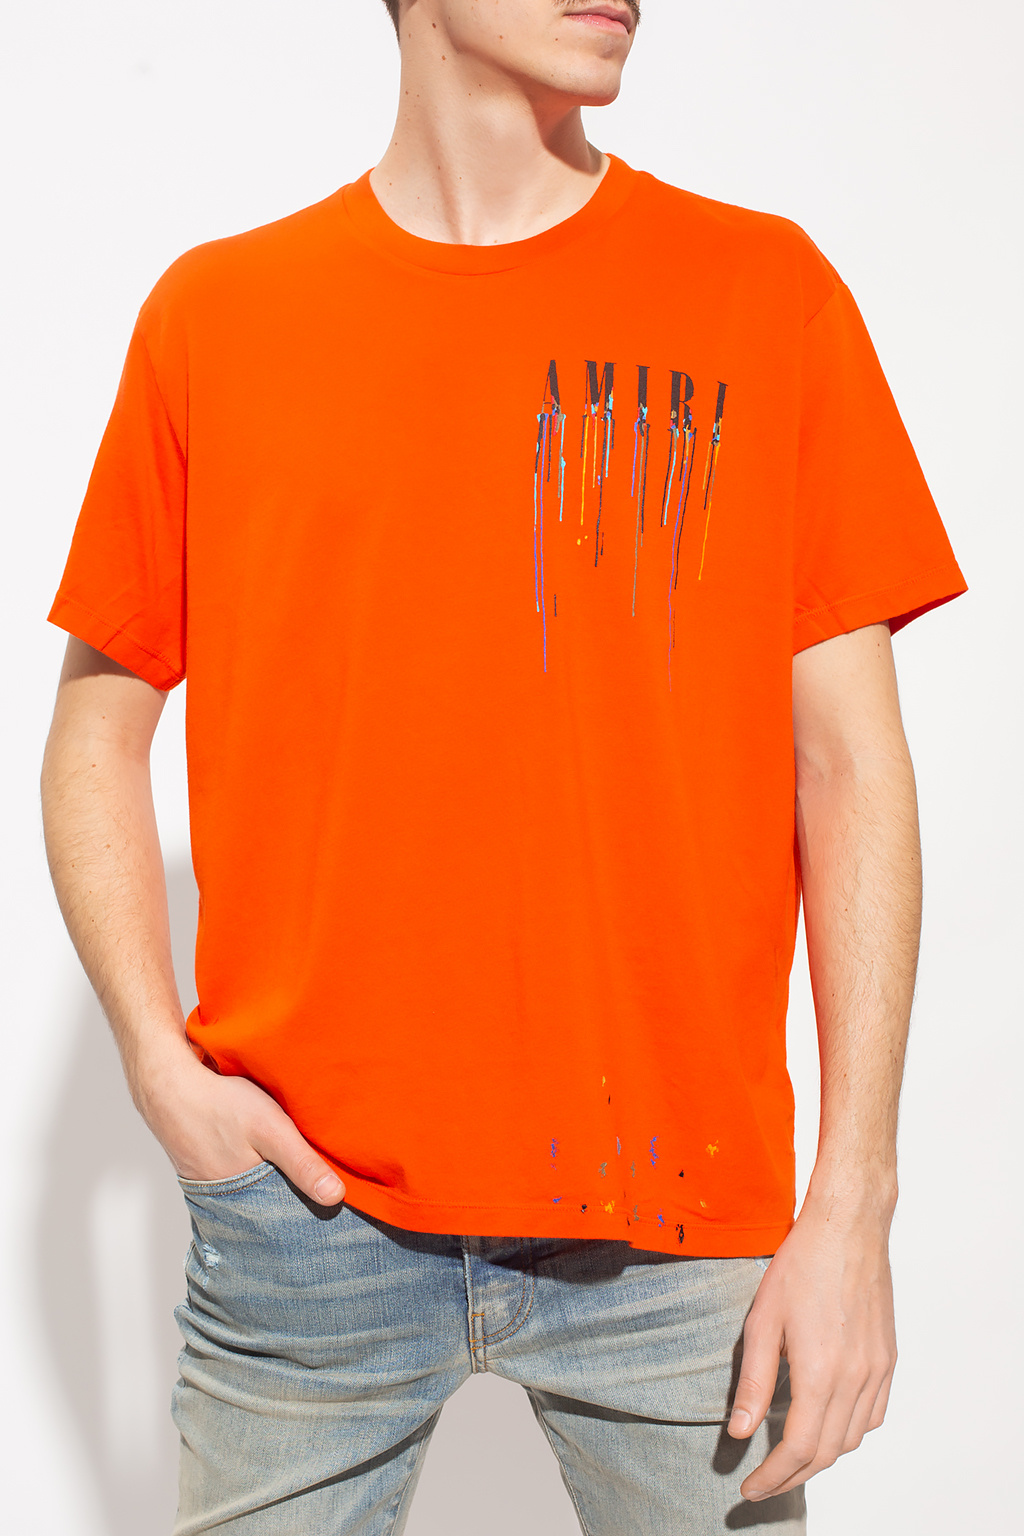 Nike Air Hooded Woven Mens Wind Jacket - IetpShops Guyana - Orange T - shirt  with logo Amiri